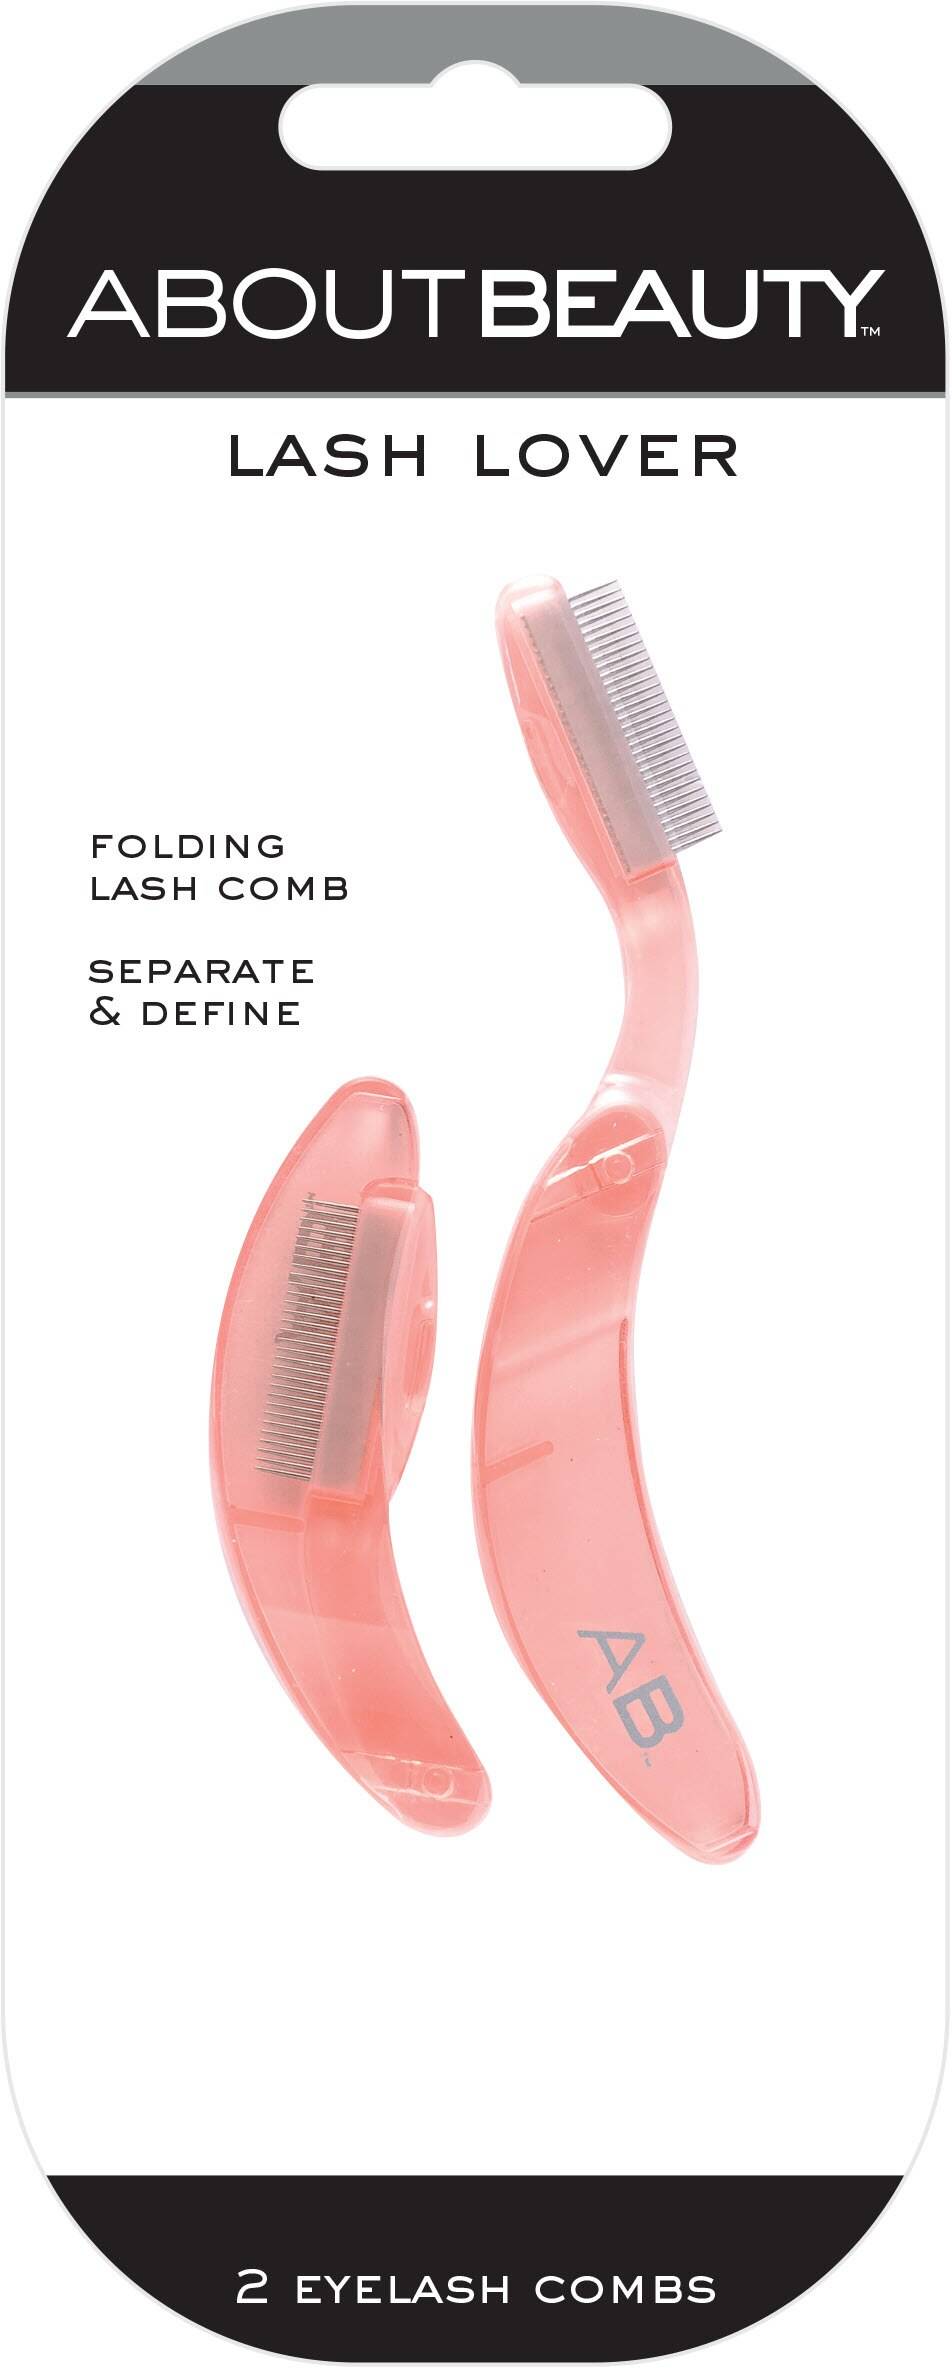 About Beauty Lash Lover Travel Size Folding Eye Lash Comb & Brush